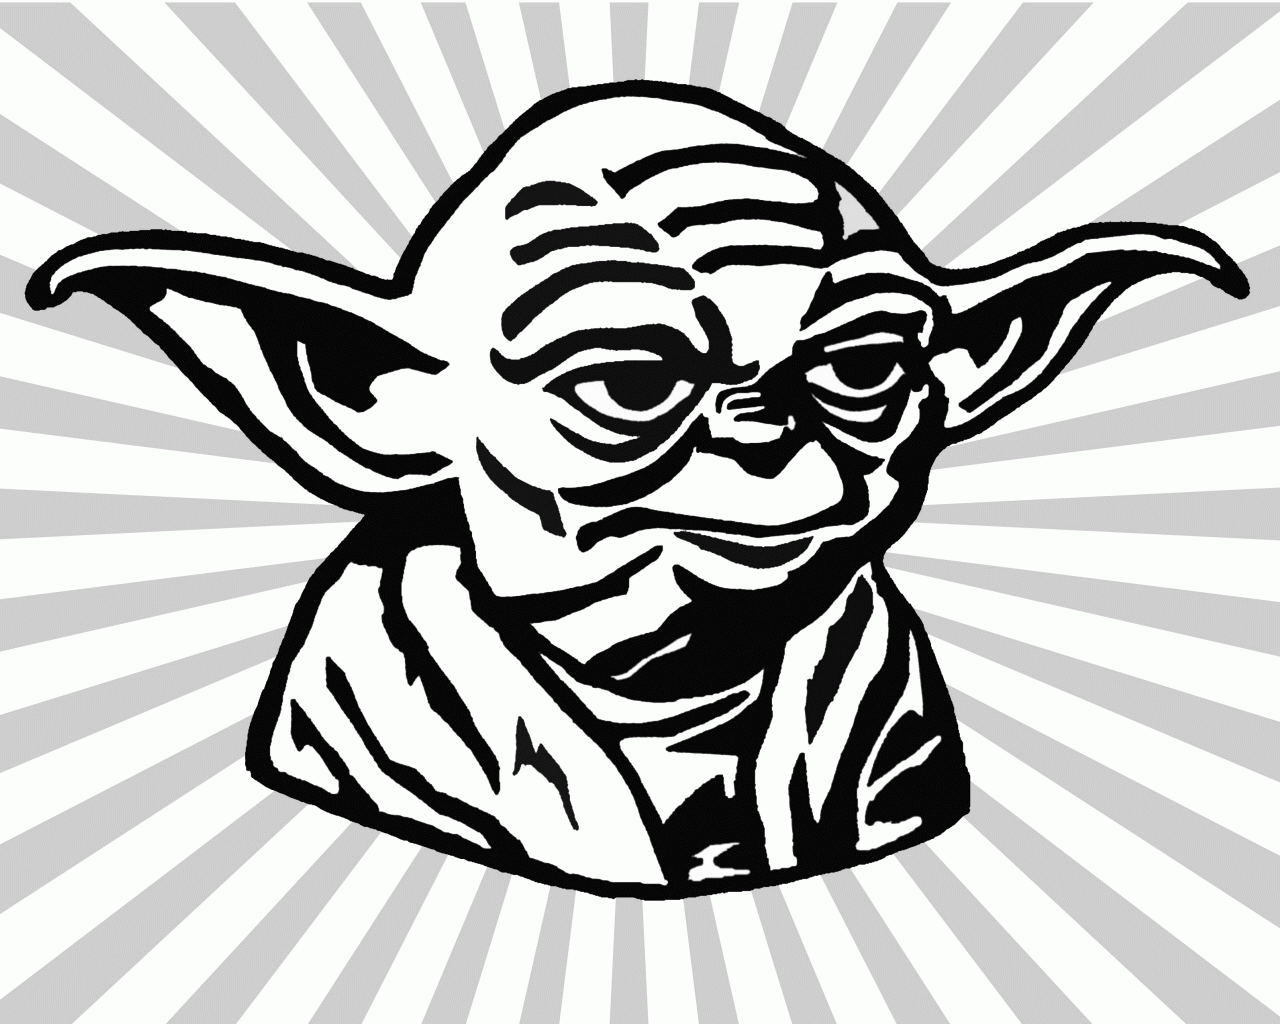 Free Yoda Printable Coloring Pages, Download Free Yoda Printable